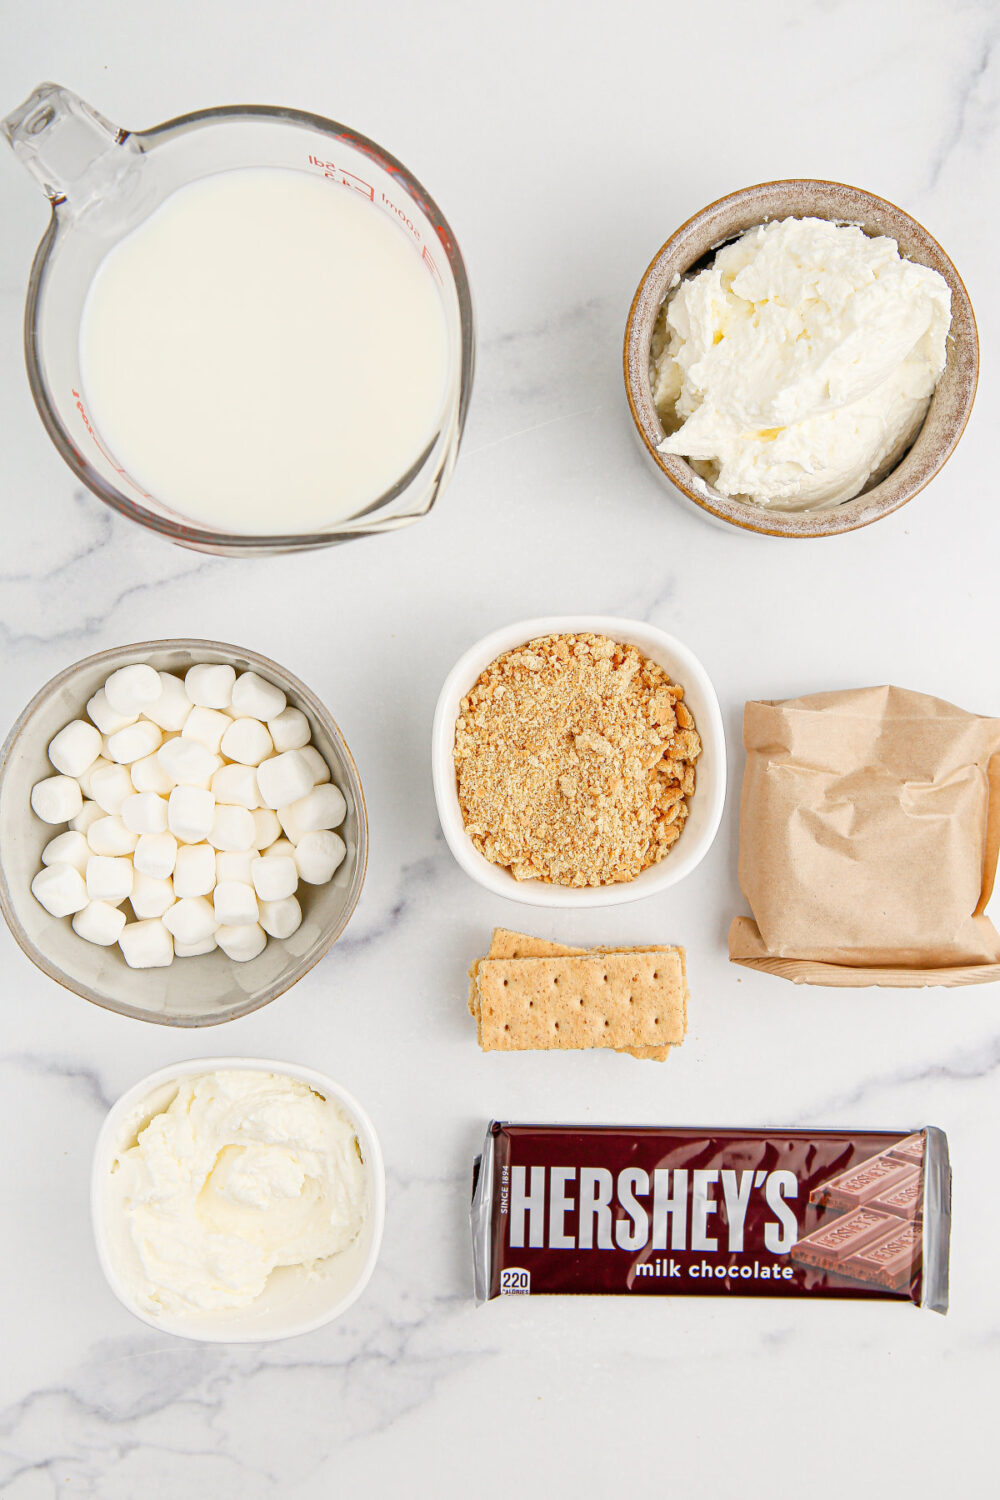 Chocolate bar, pudding mix, milk, marshmallows, whipped cream, and graham crackers. 